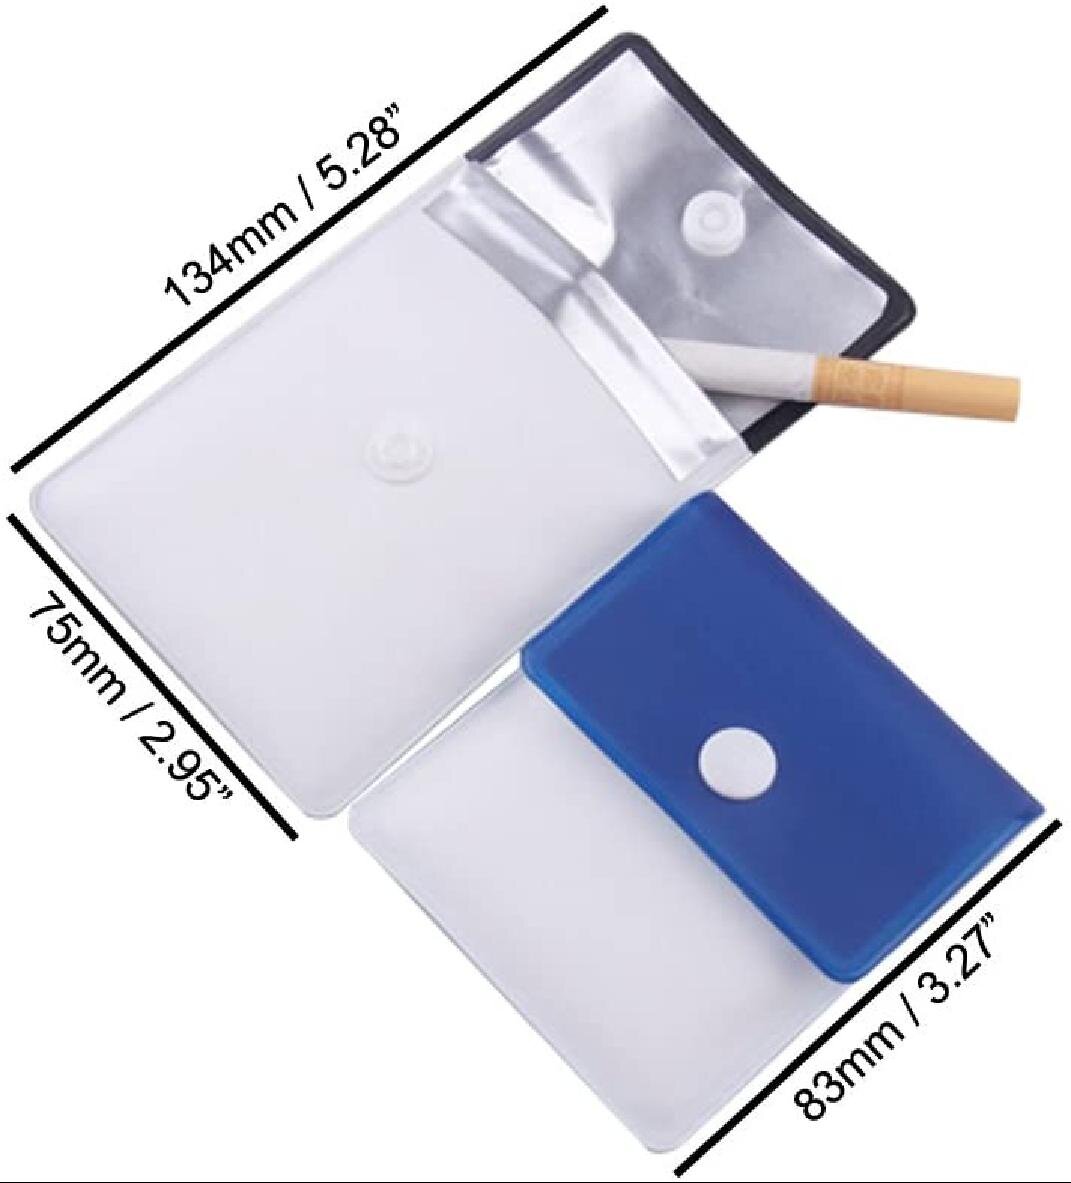 My Ashtray Green and White Pocket Ashtray Portable Reusable Fireproof Lining x 5 